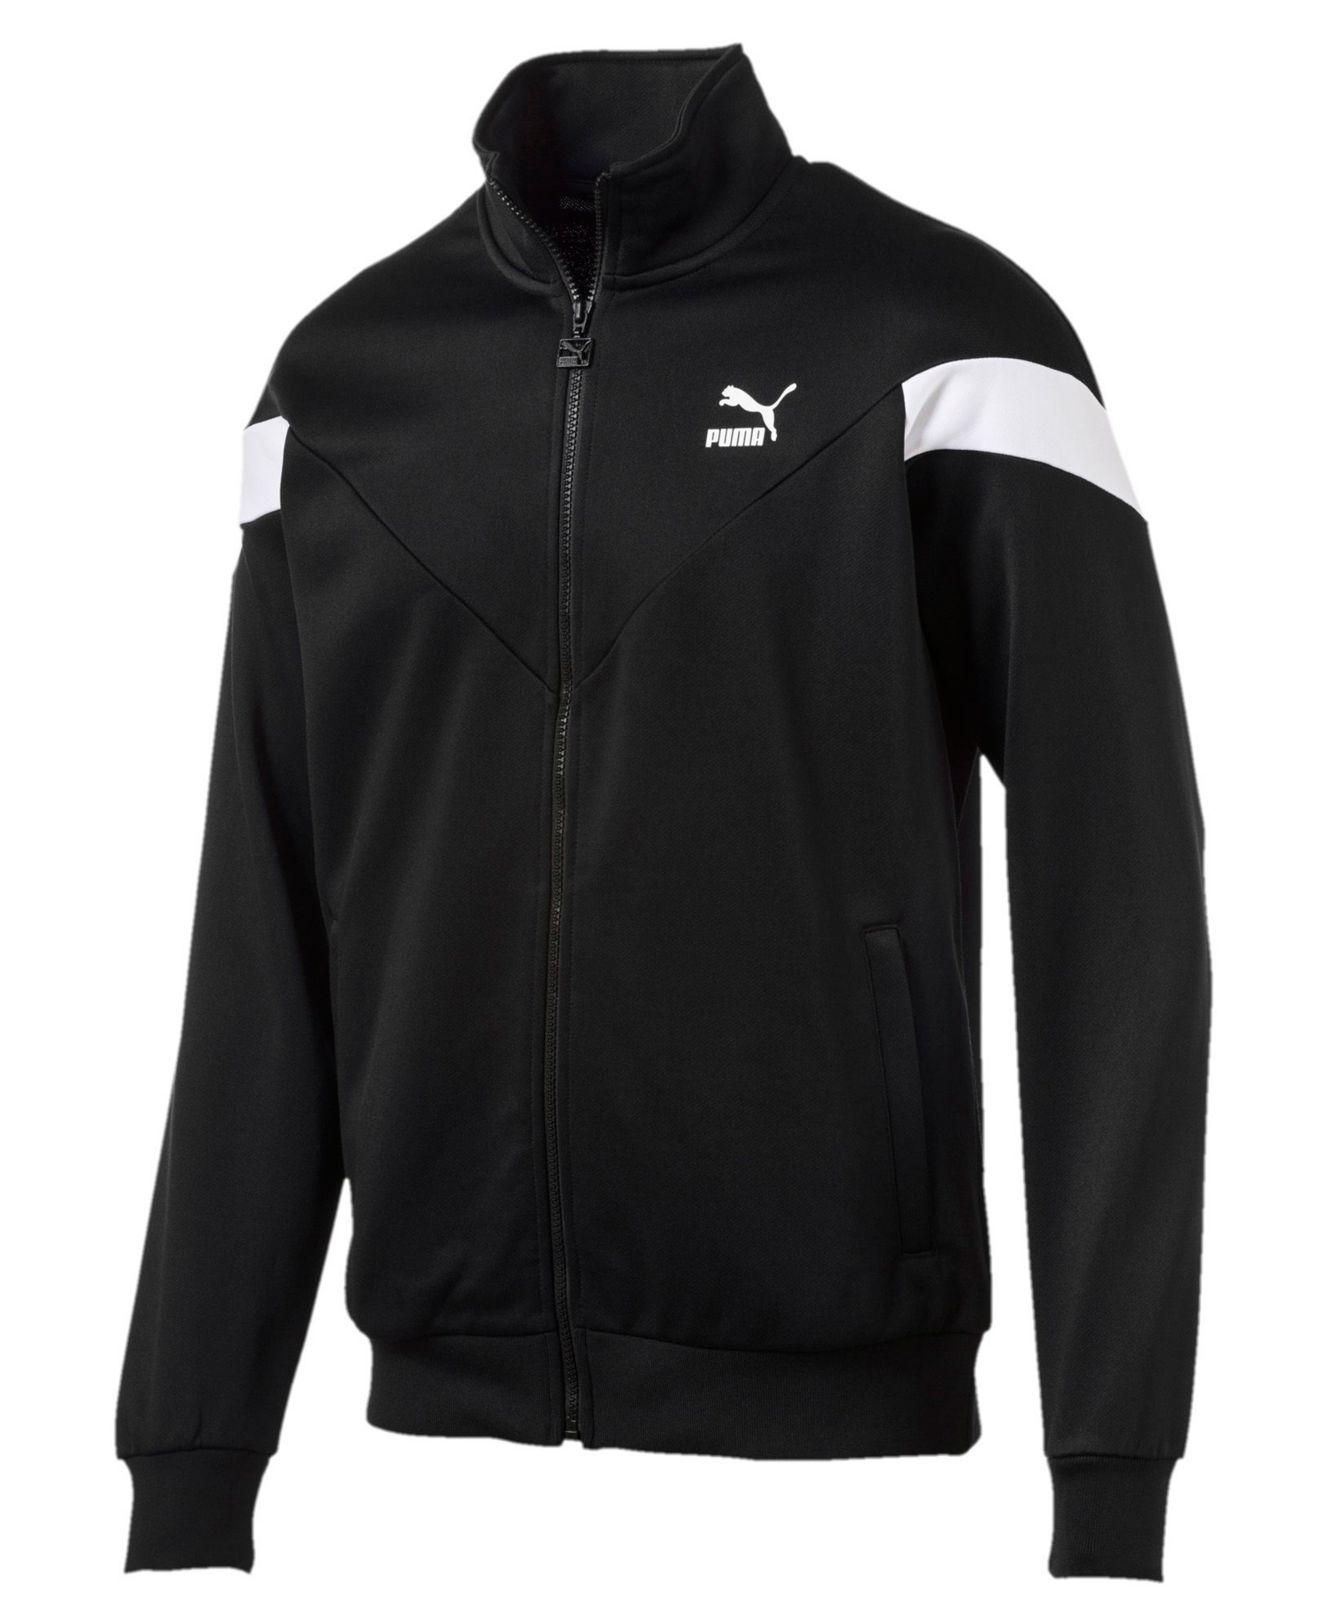 Lyst - PUMA Mcs Track Jacket in Black for Men - Save 26%